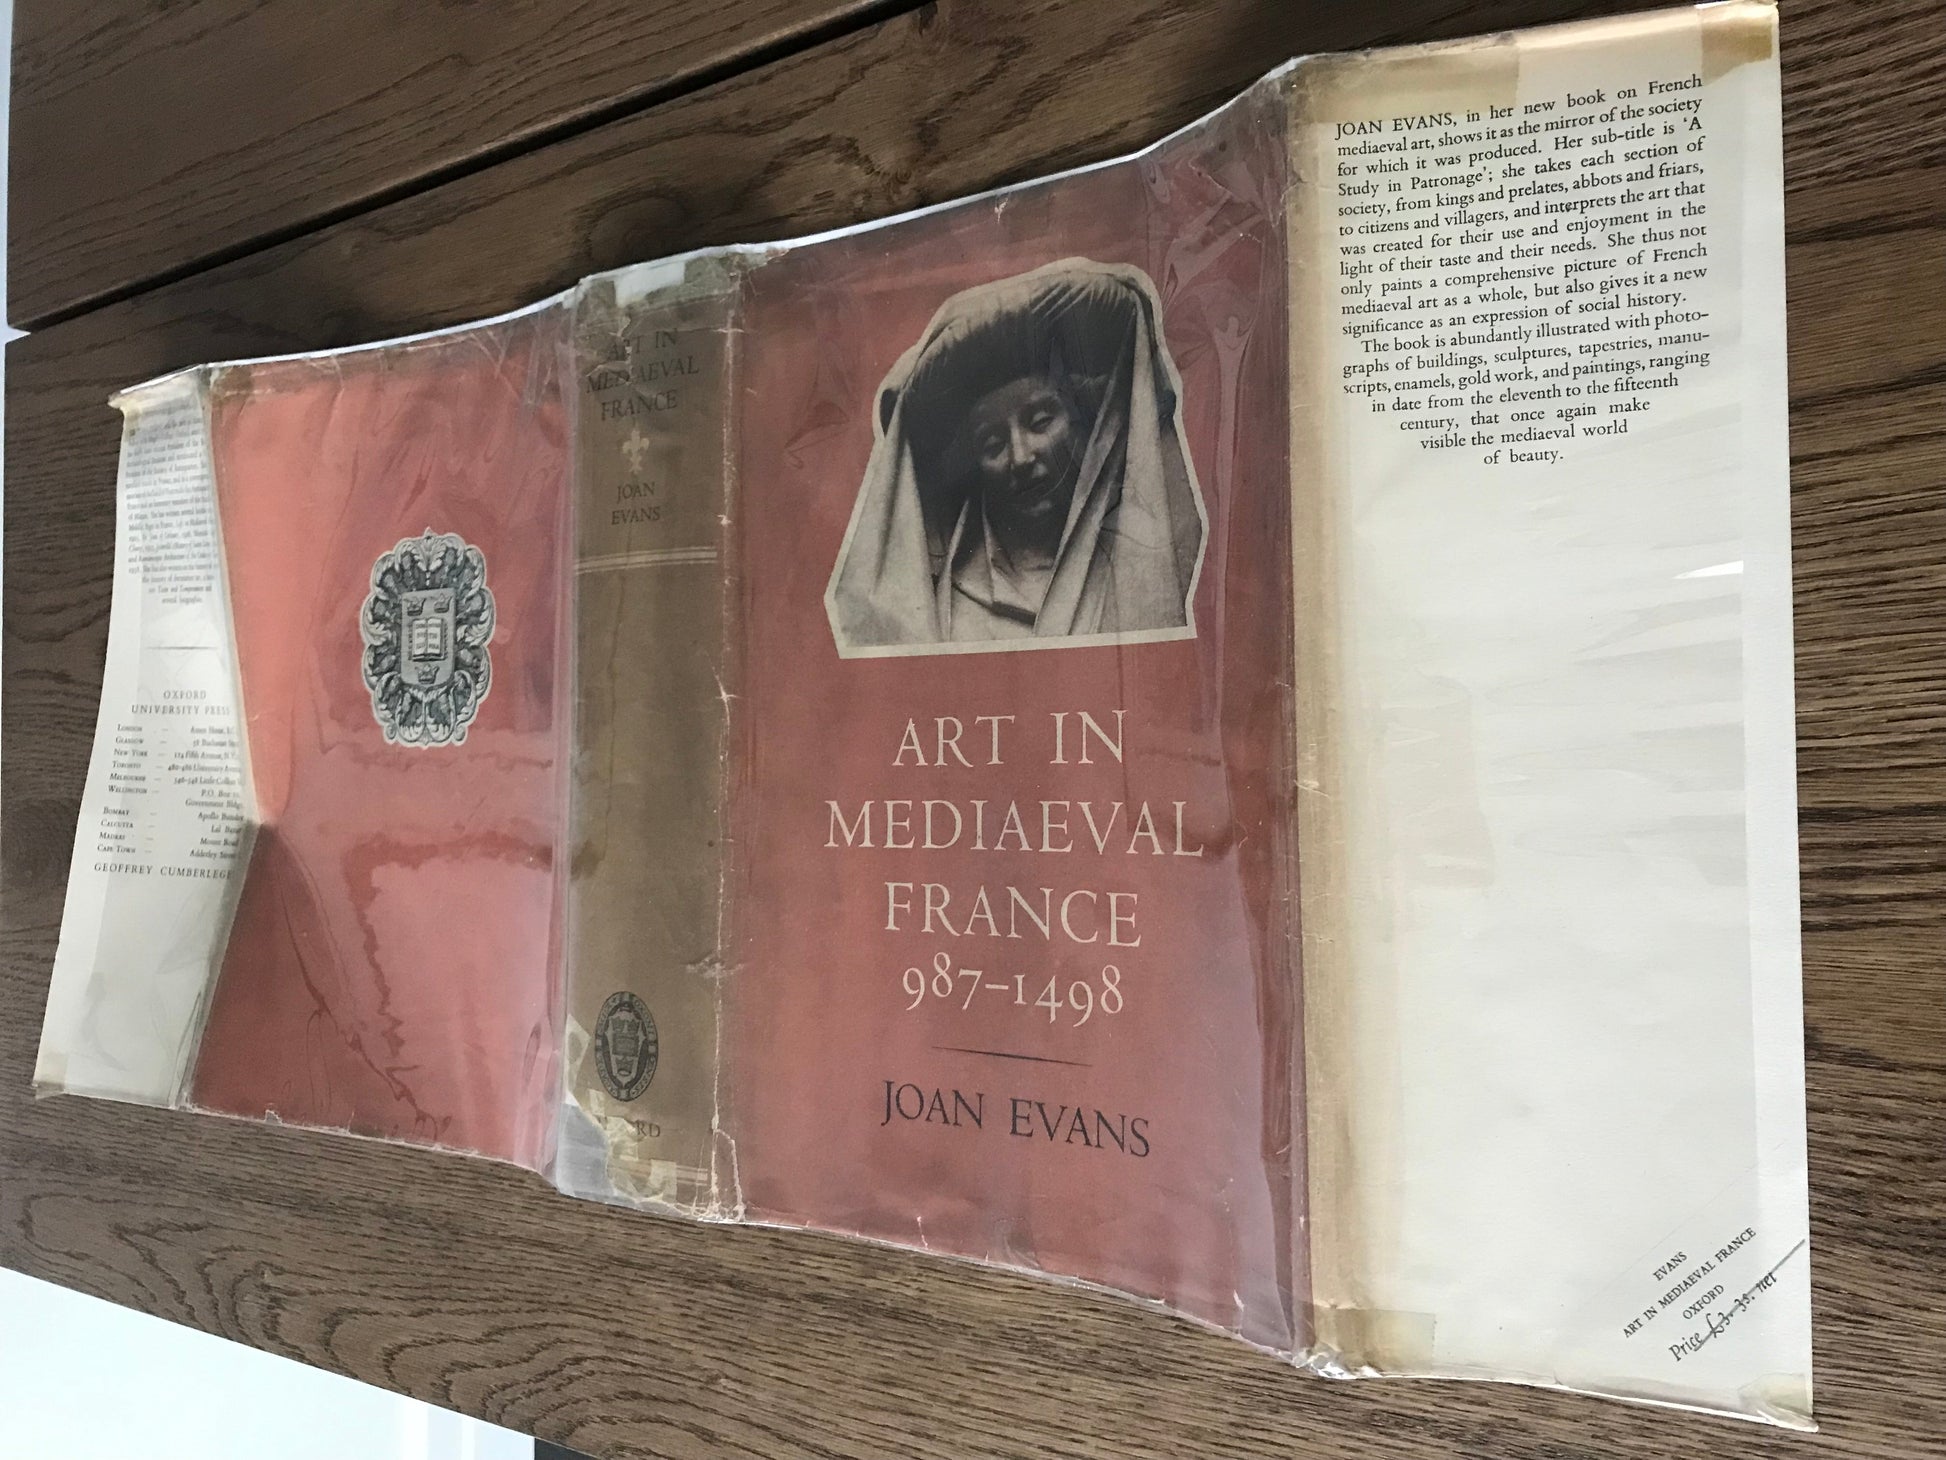 ART IN MEDIAEVAL FRANCE  978-1498   JOAN EVANS BooksCardsNBikes